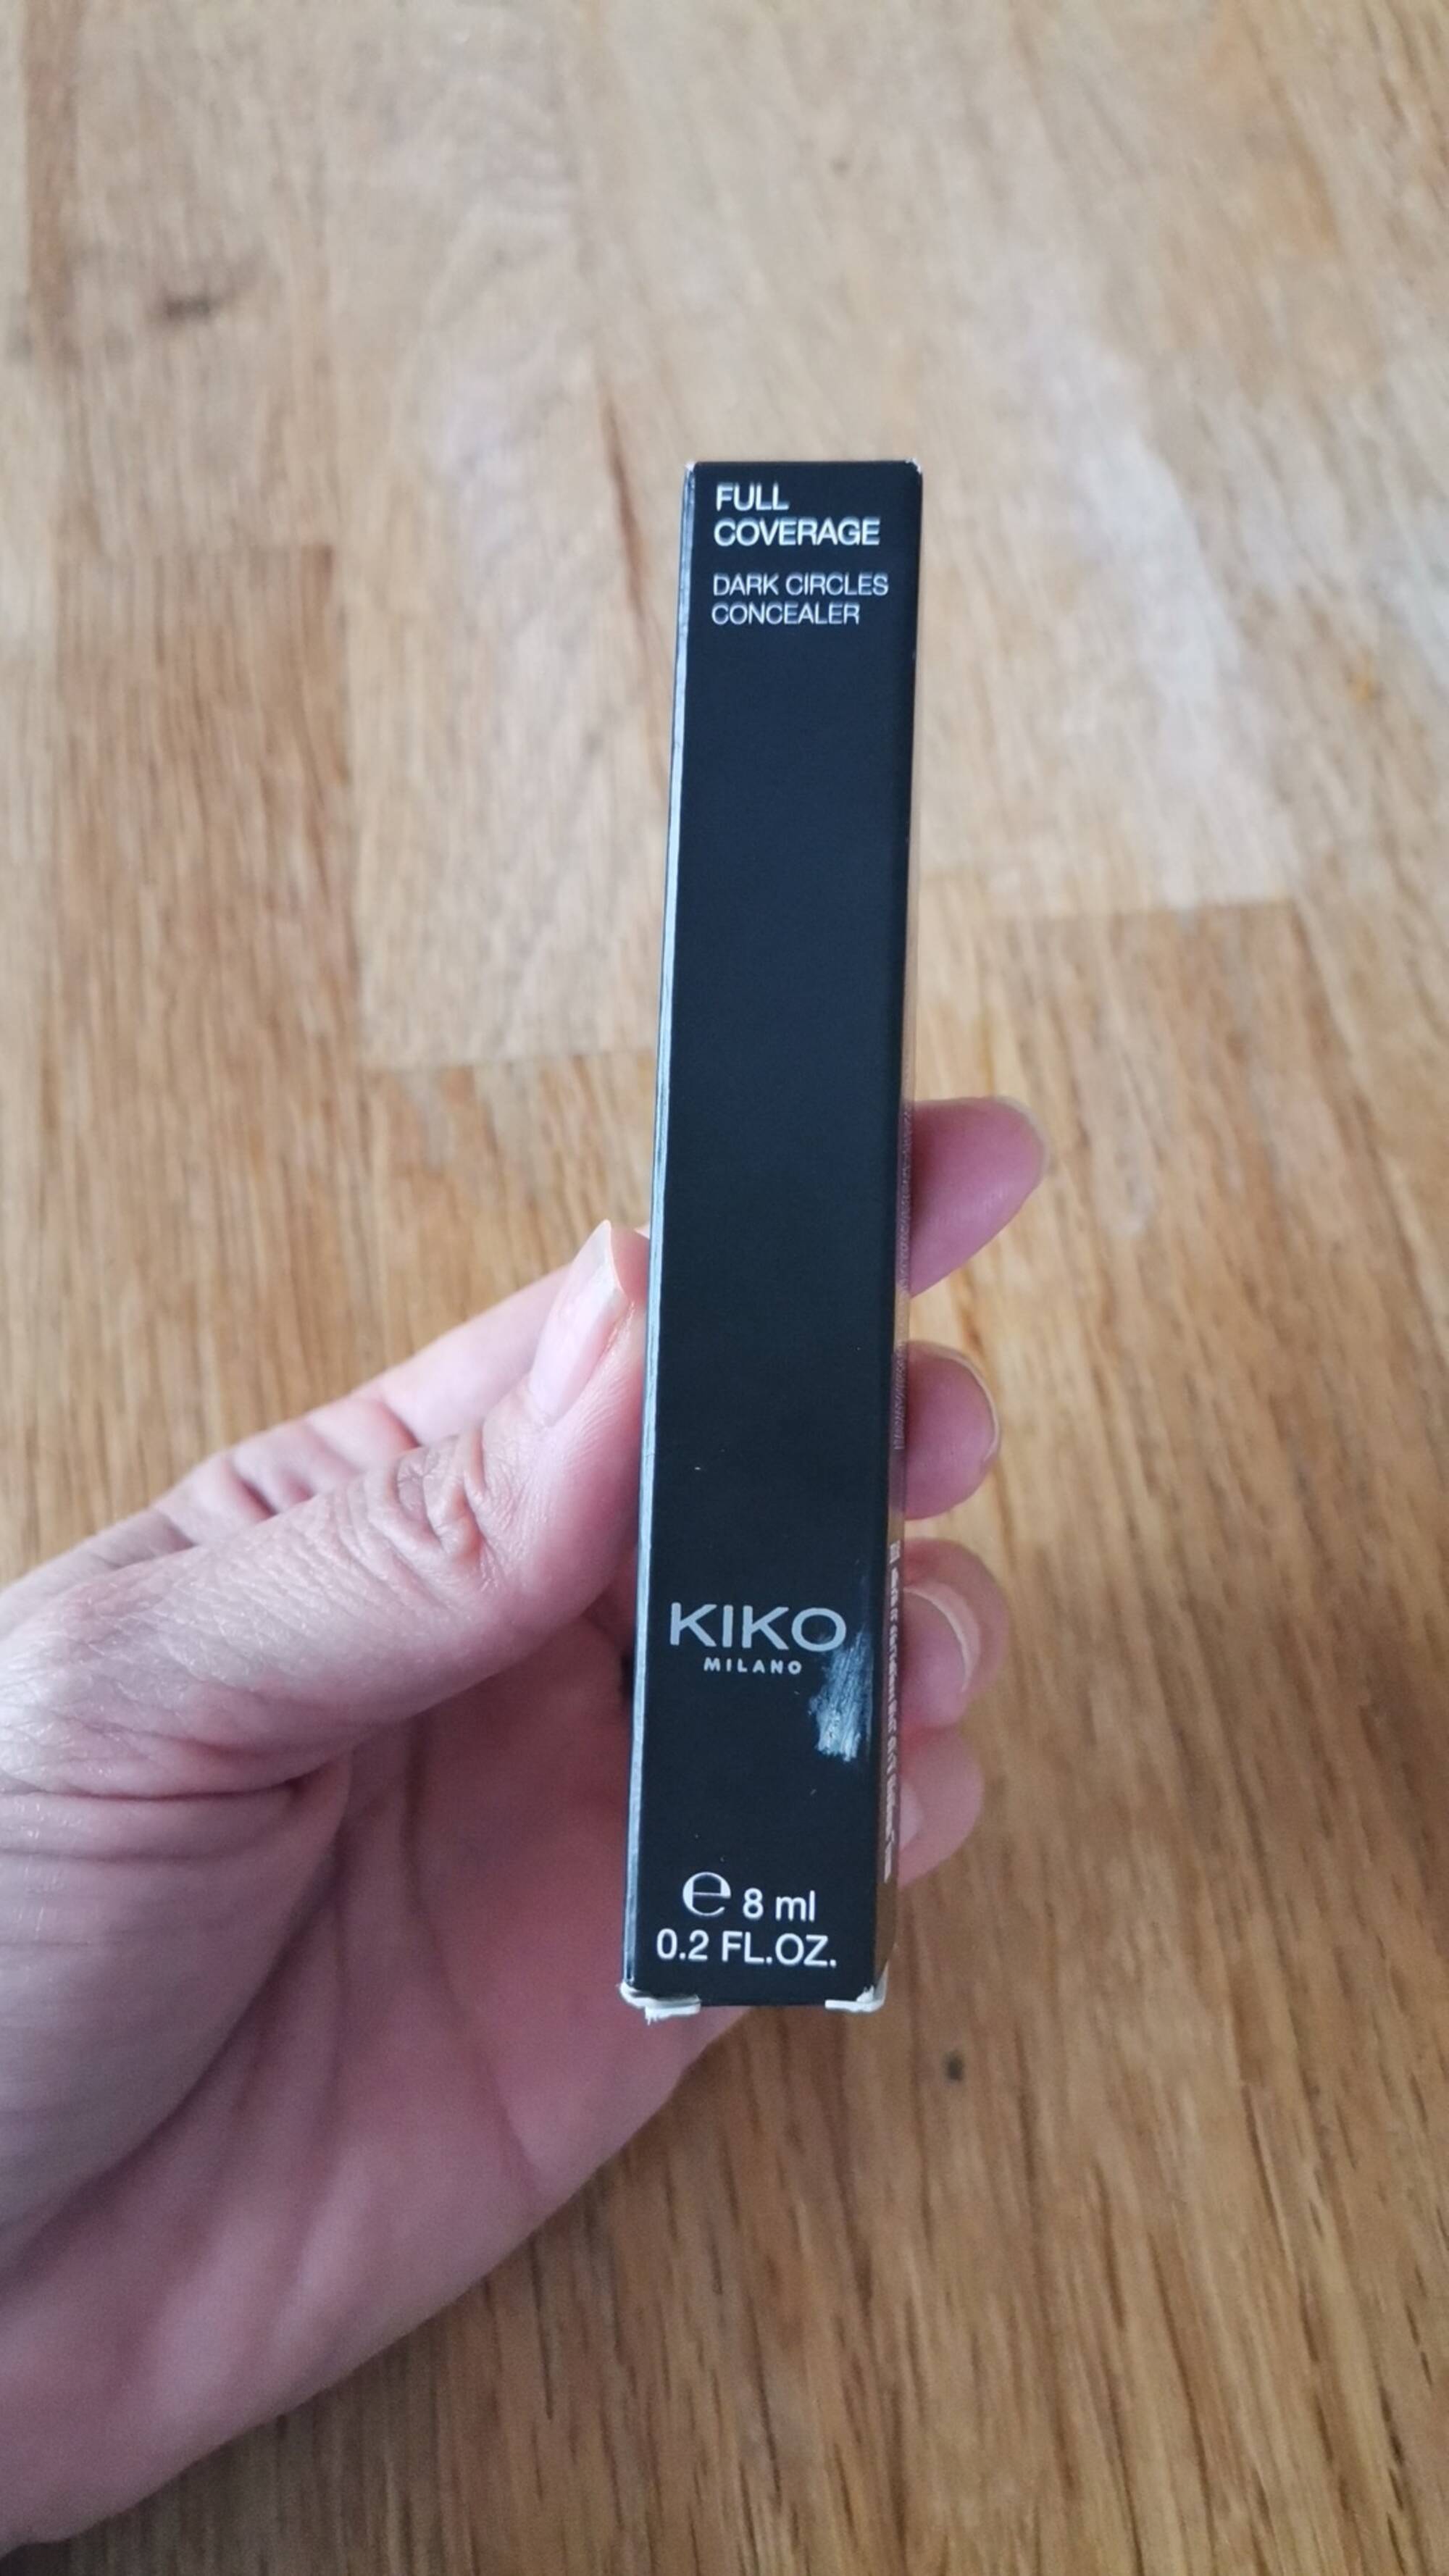 KIKO MILANO - Full coverage - Dark circles concealer